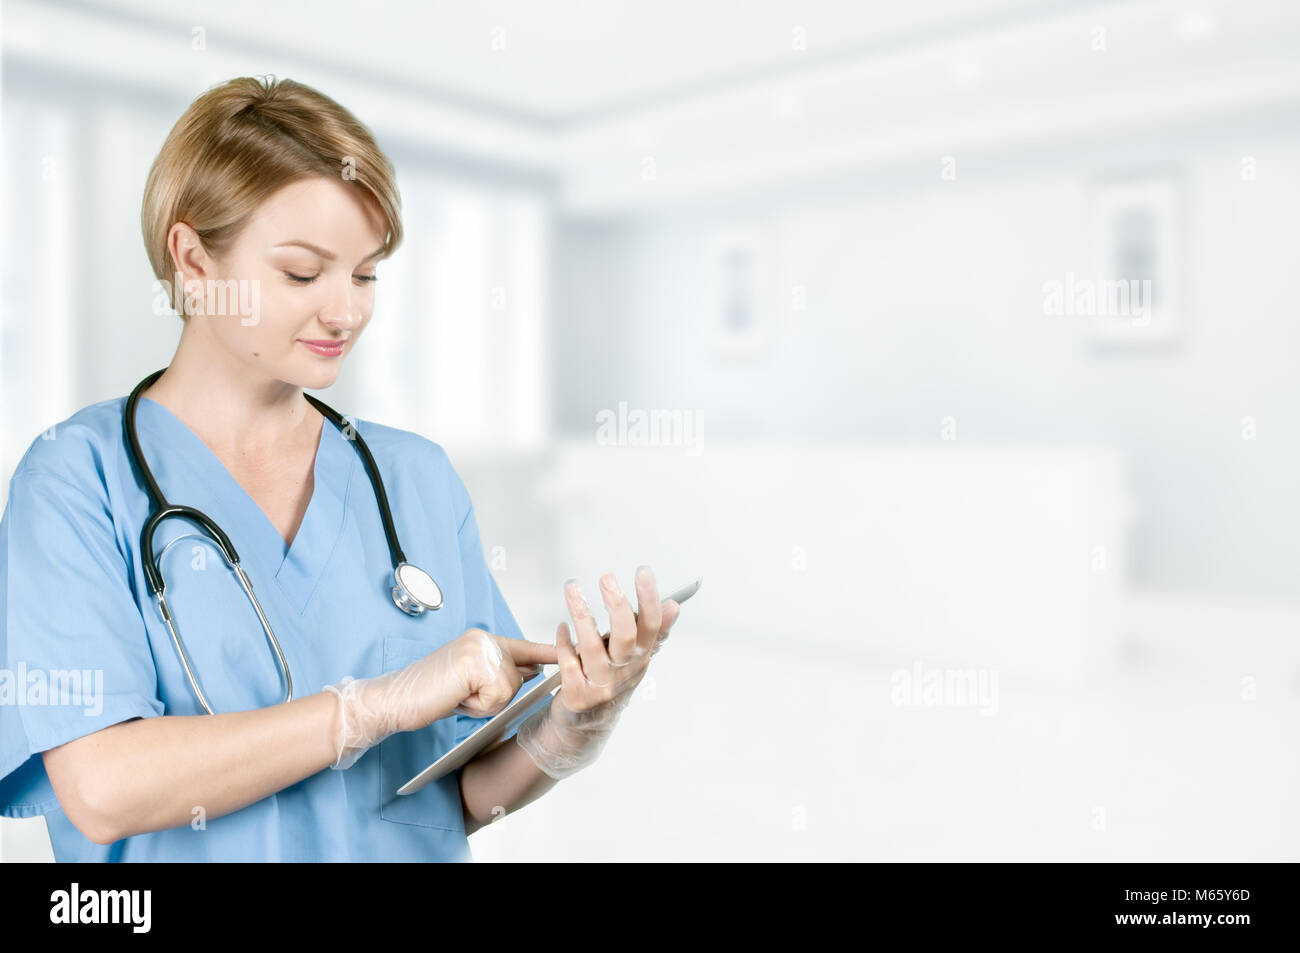 Medico indossando i medici uniforme con uno stetoscopio Foto Stock